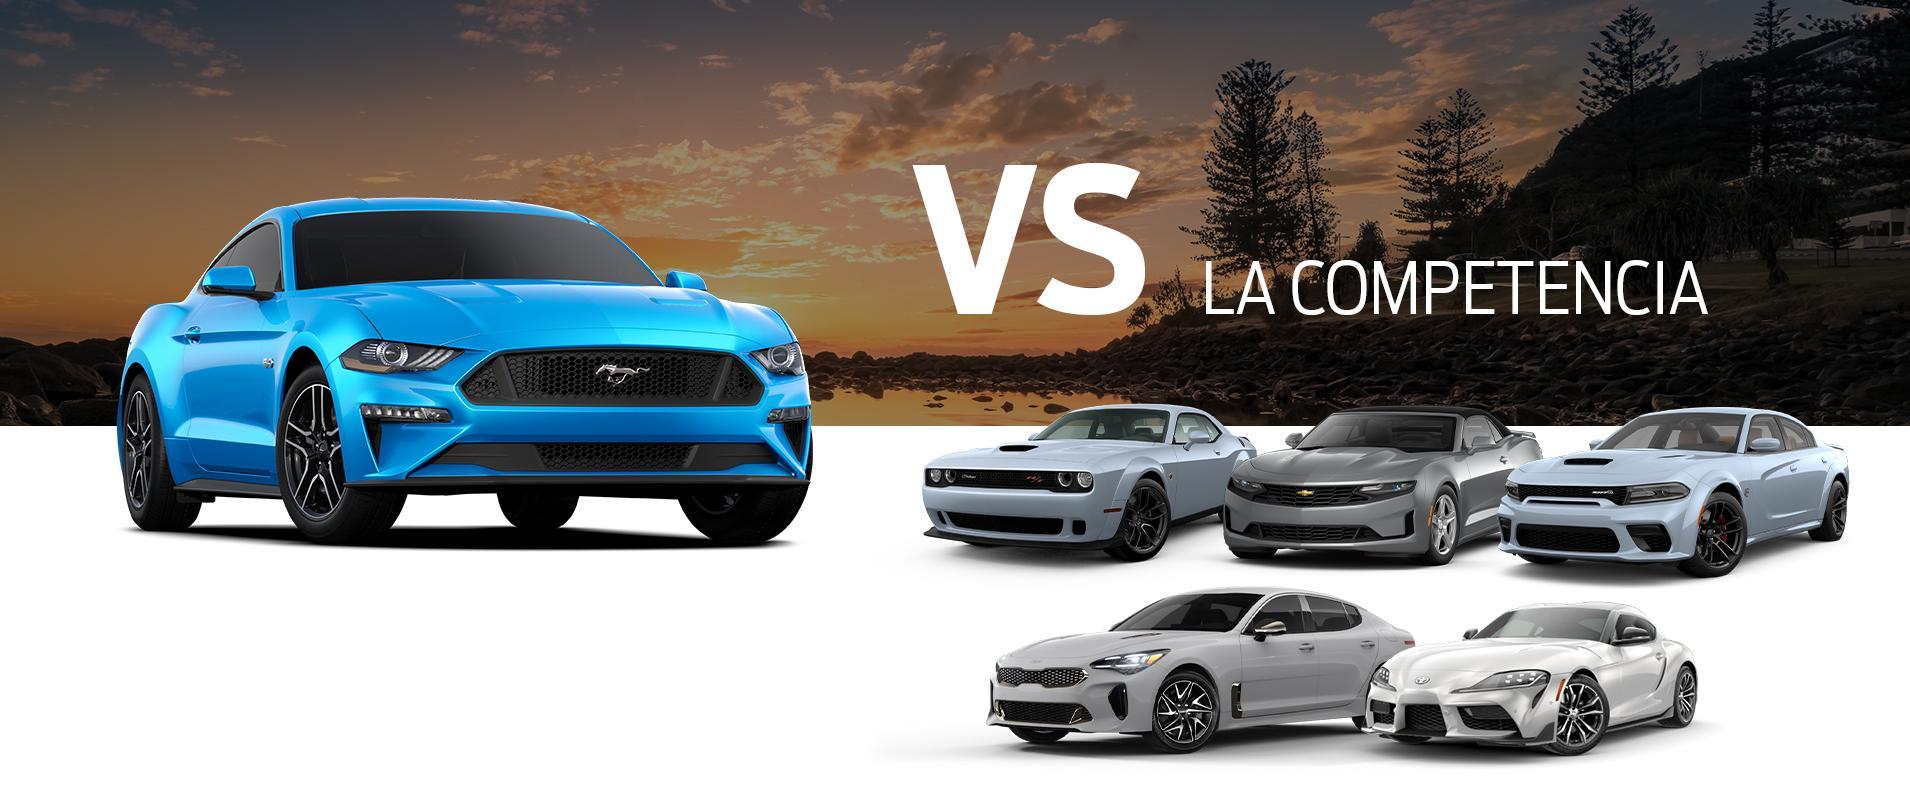 Mustang vs Competencia